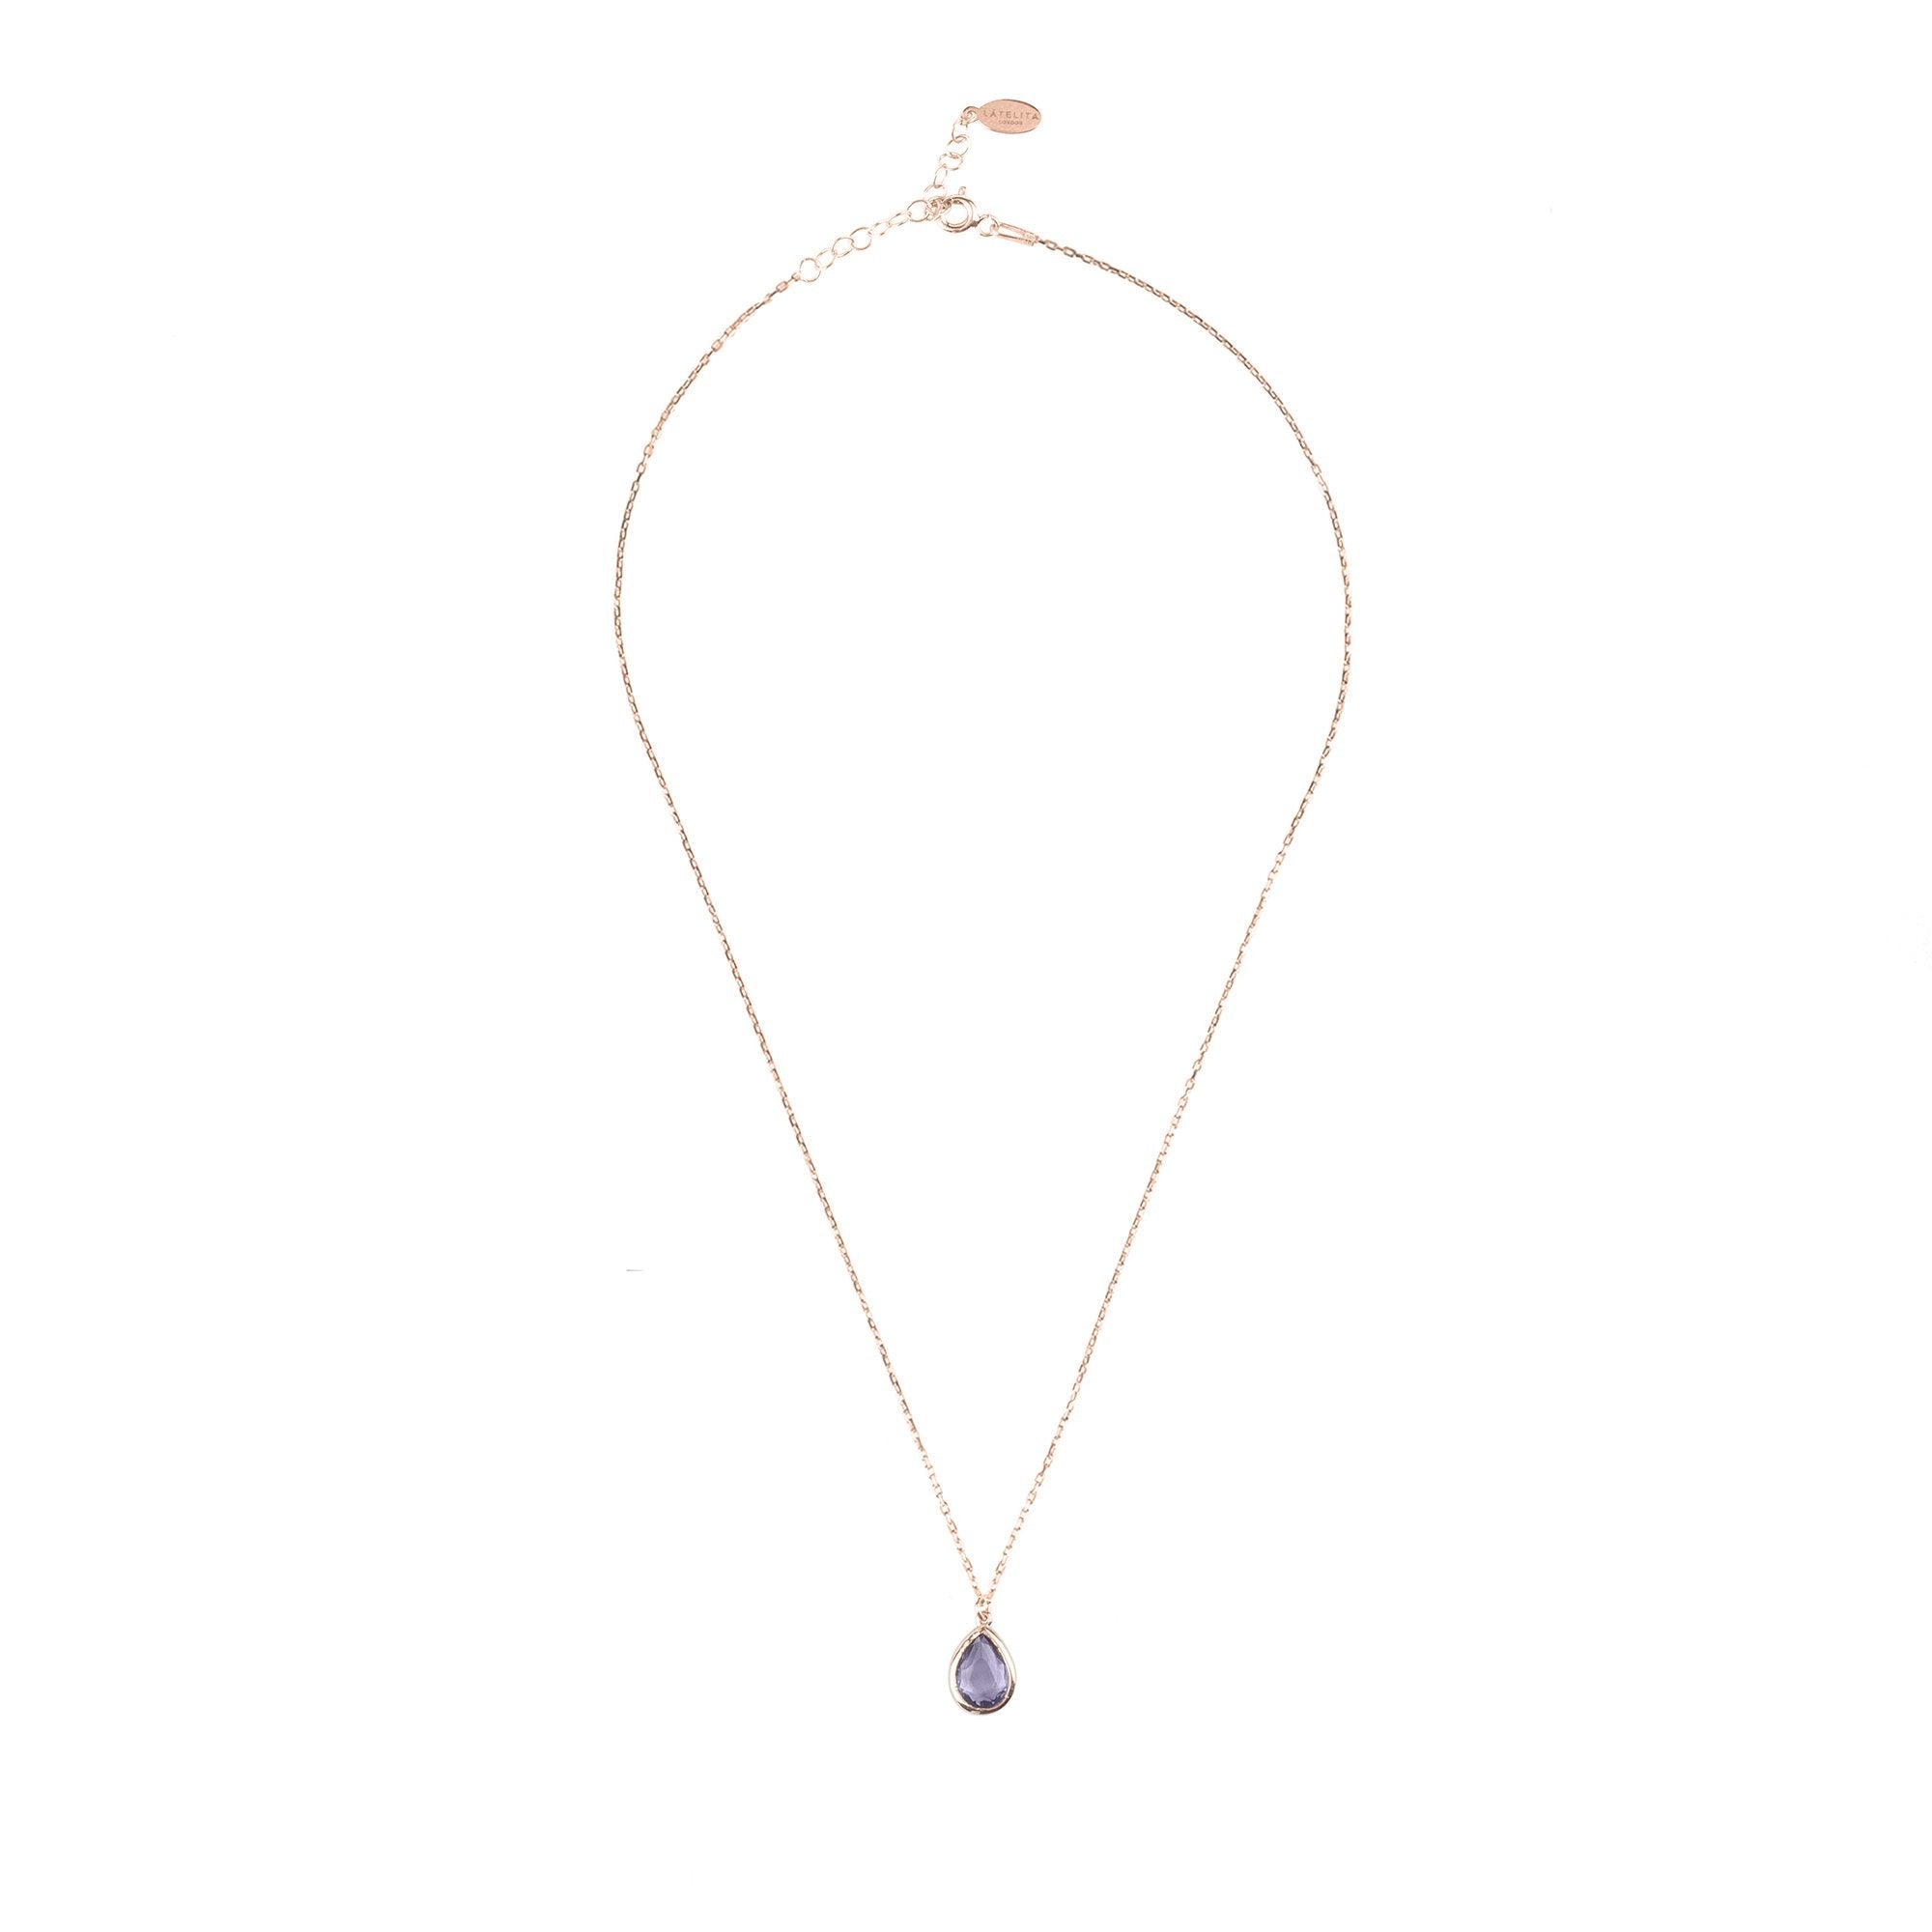 Capri Collection Amethyst Teardrop Necklace - Rosegold Pendant, Birthstone Jewelry, 40-45cm Length, Ideal Gift Bijou Her